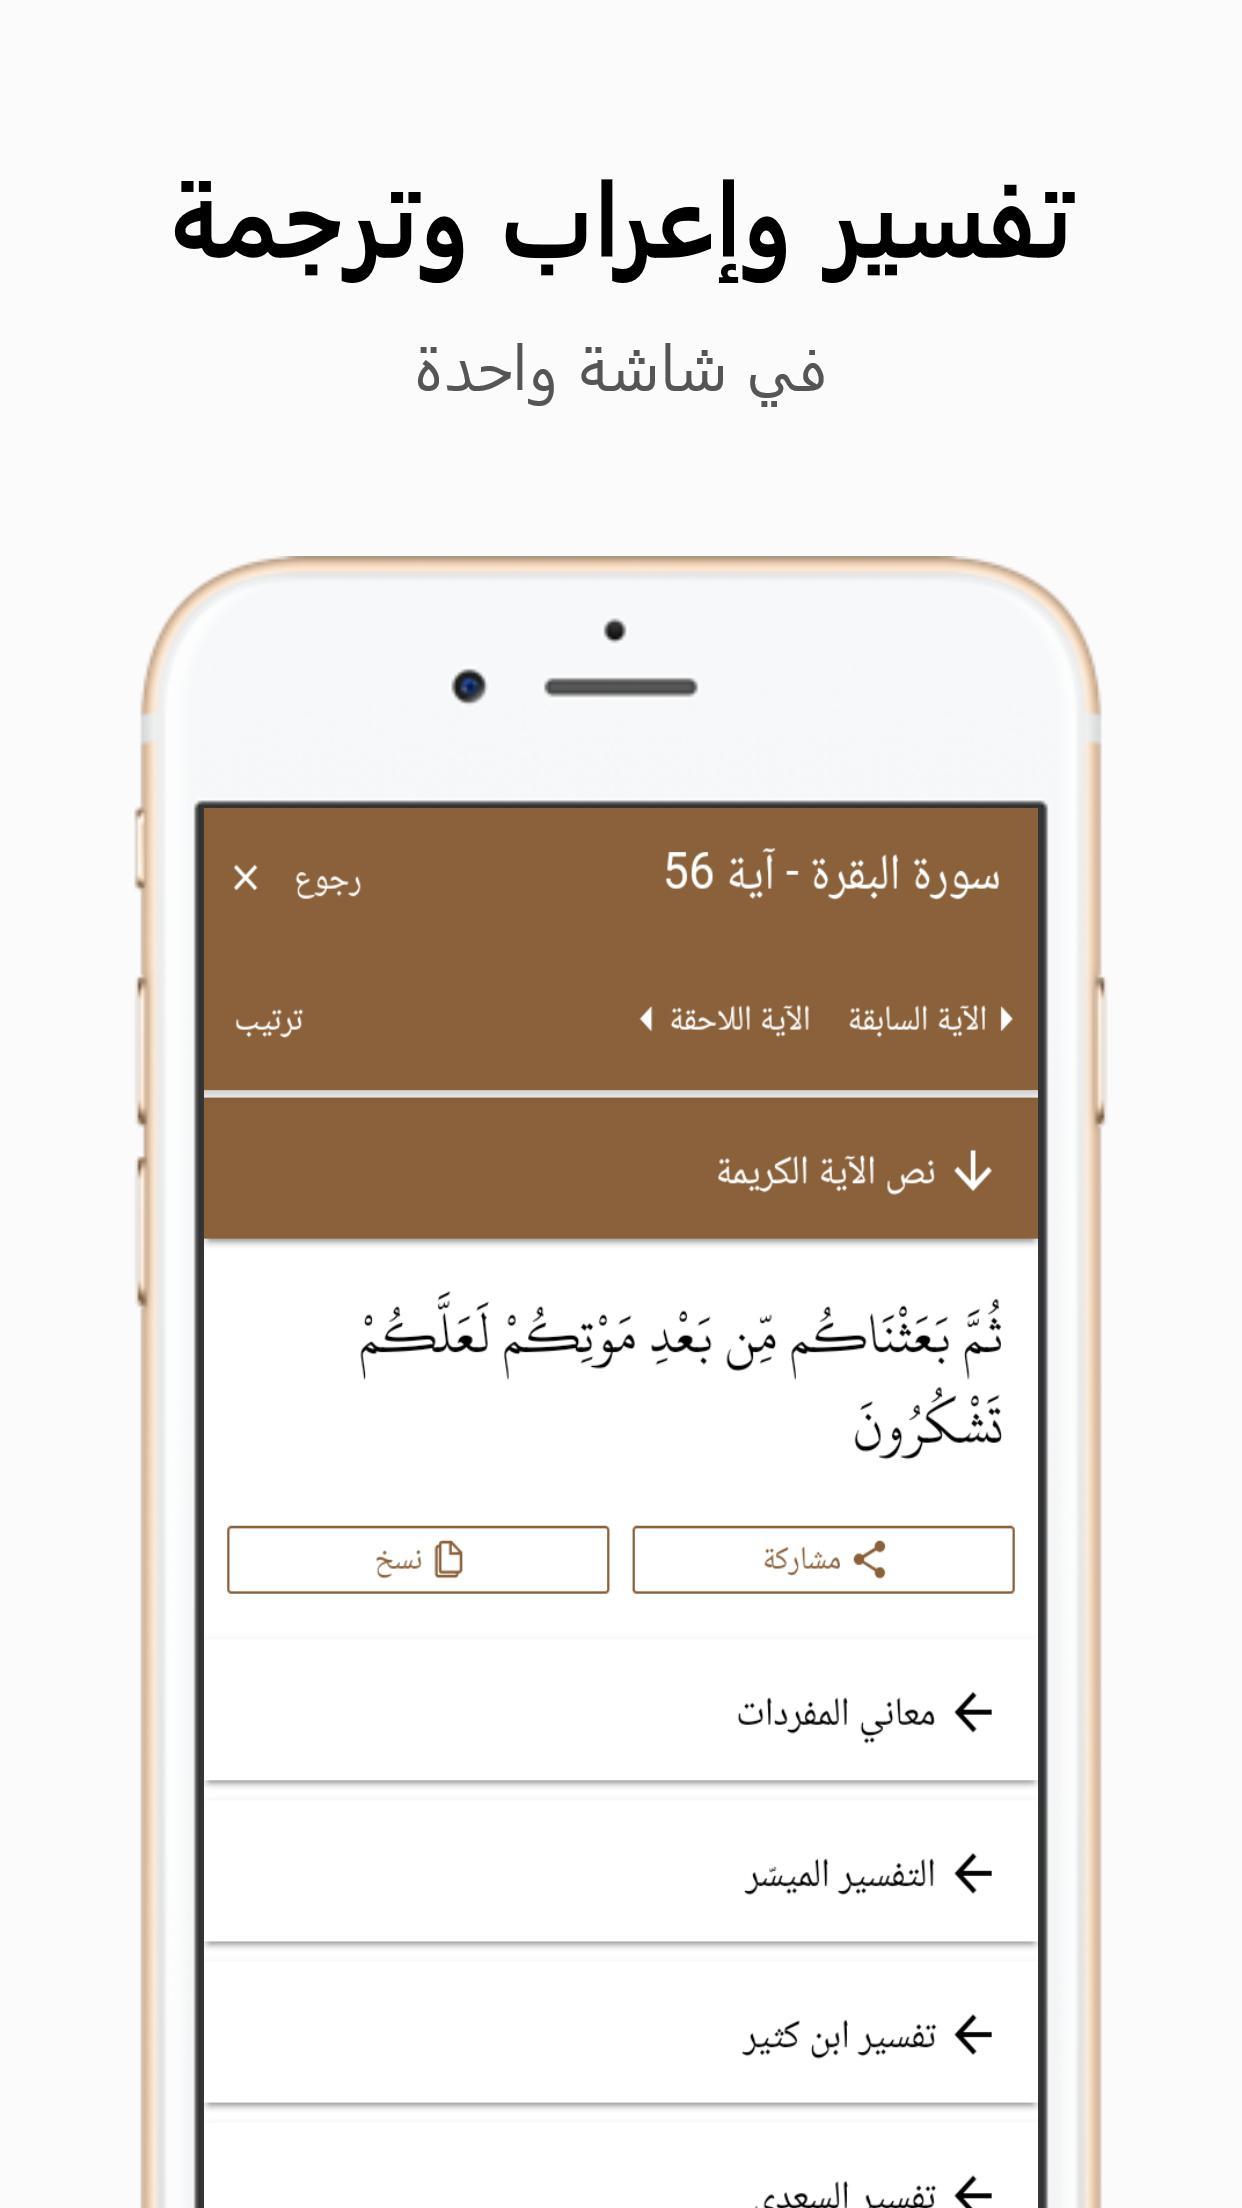 خير زاد مصحف ورش بالرسم العثماني for android apk download